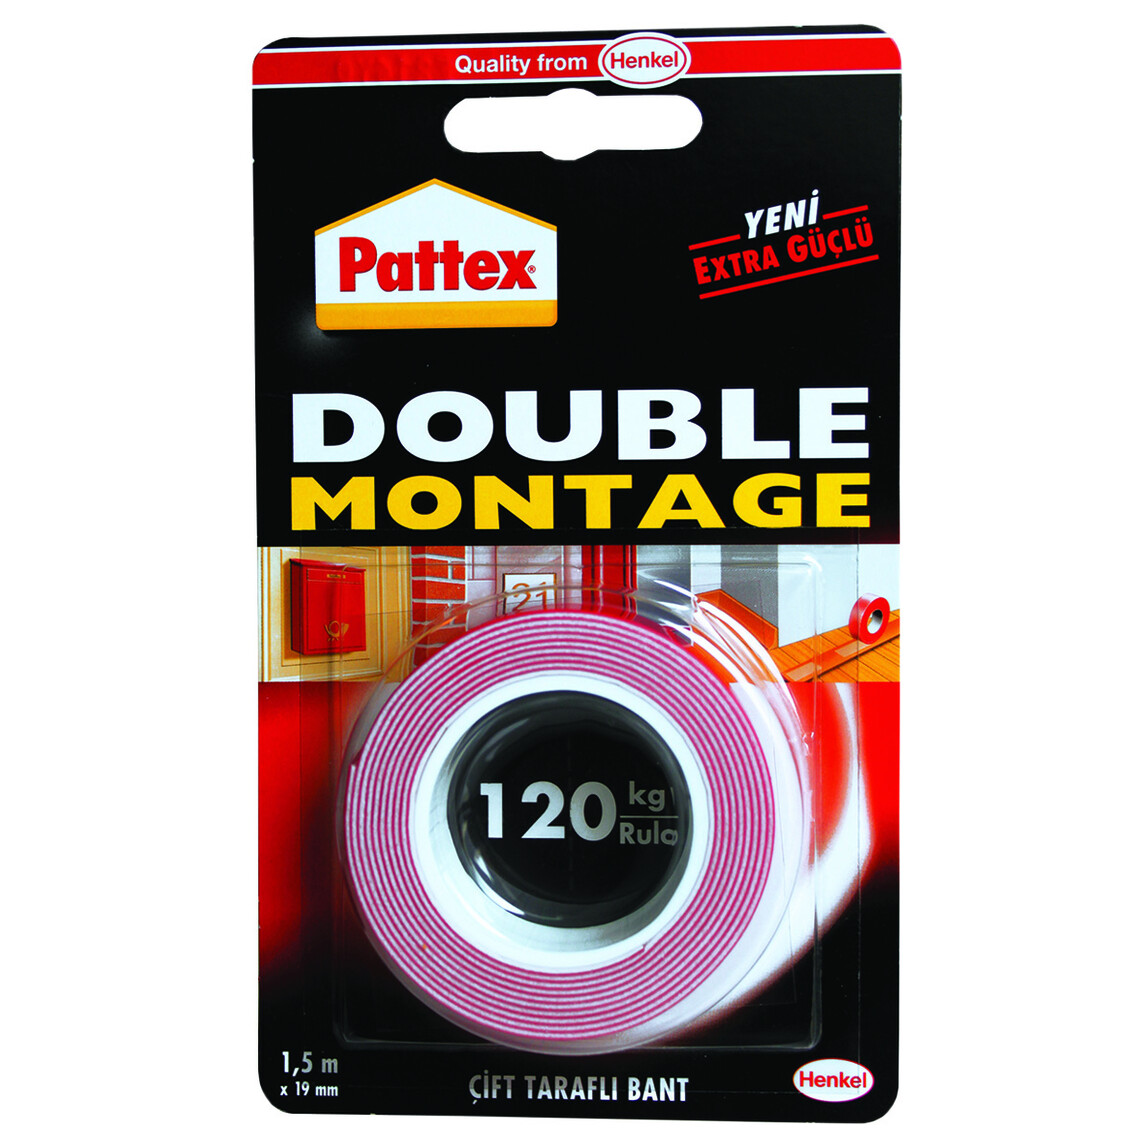    Pattex Double Montaj Bandı 120 Kg / 19 mm x 1.5 m   